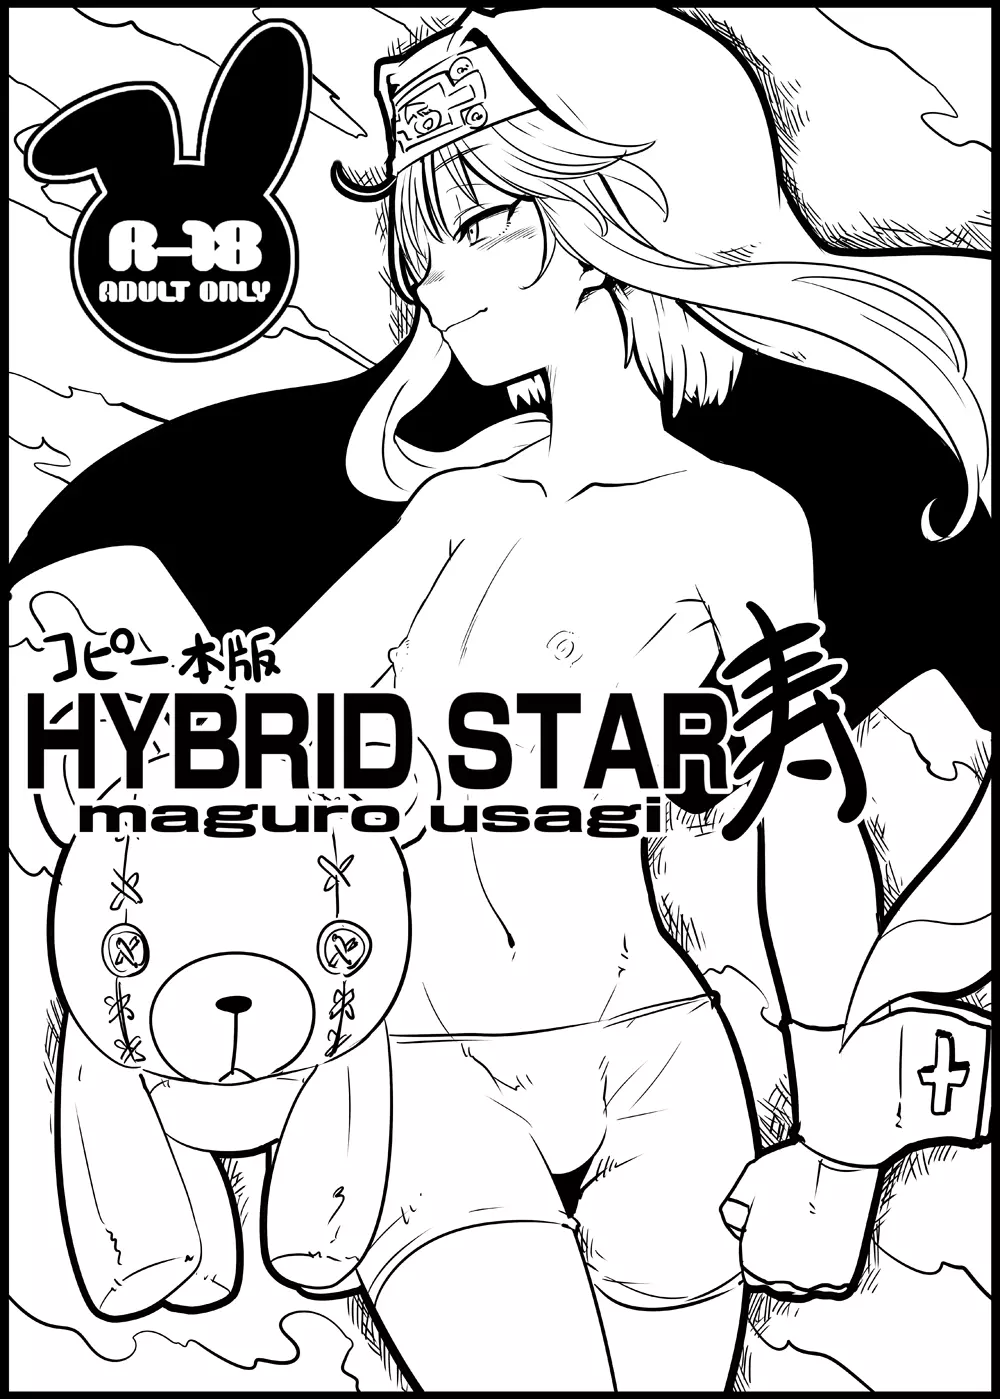 HYBRID STAR - page1